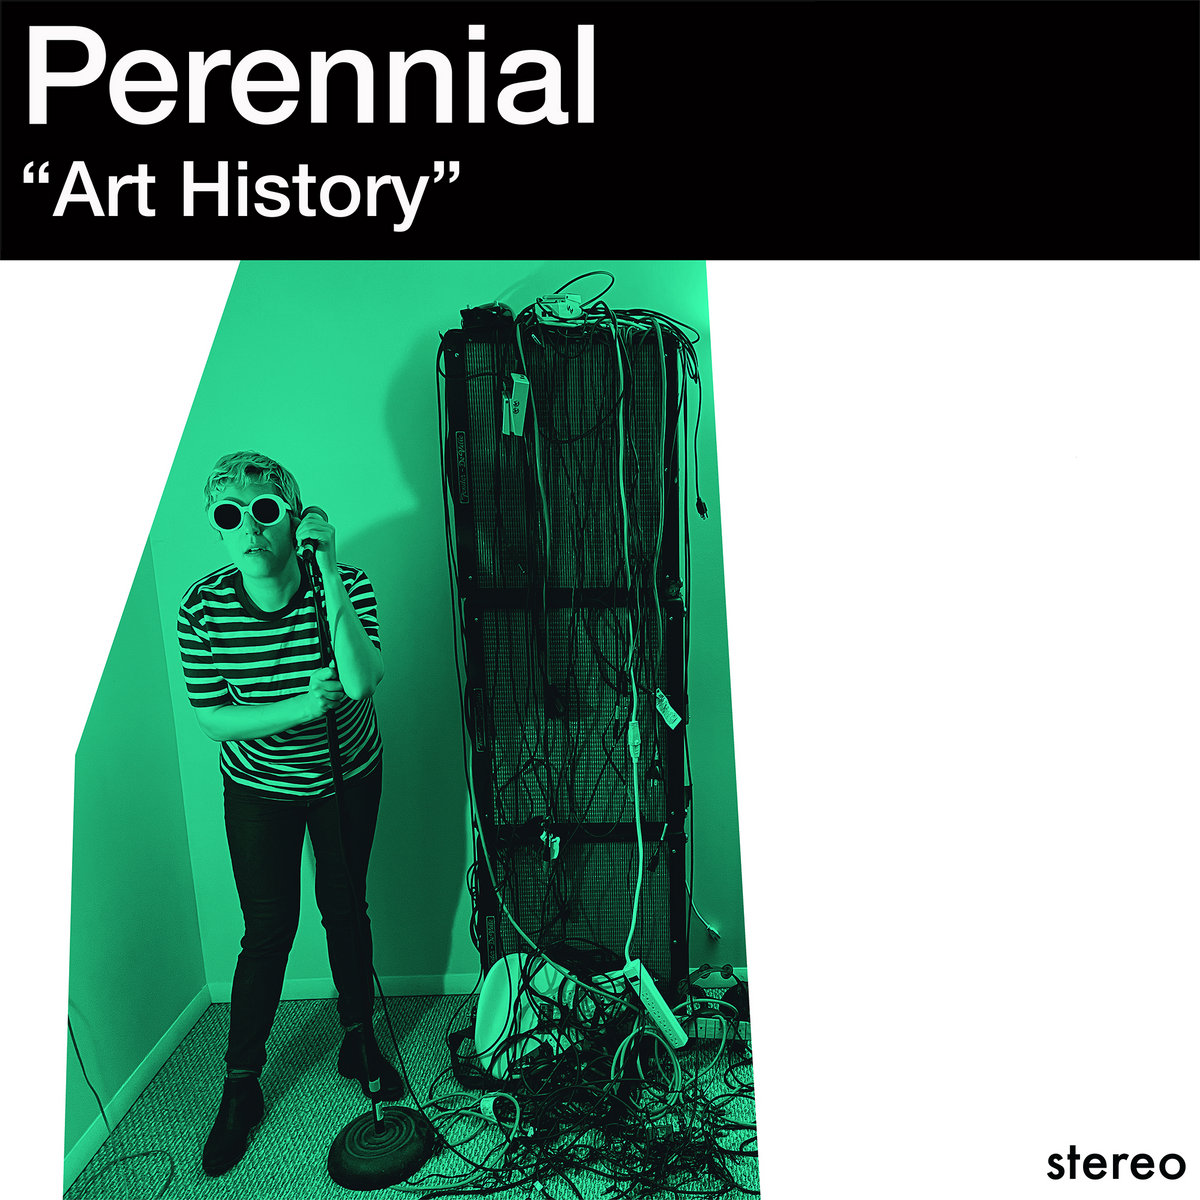 Perennial Share 'Action Painting' Single & Announce 'Art History' Album thepunksite.com/news/perennial…